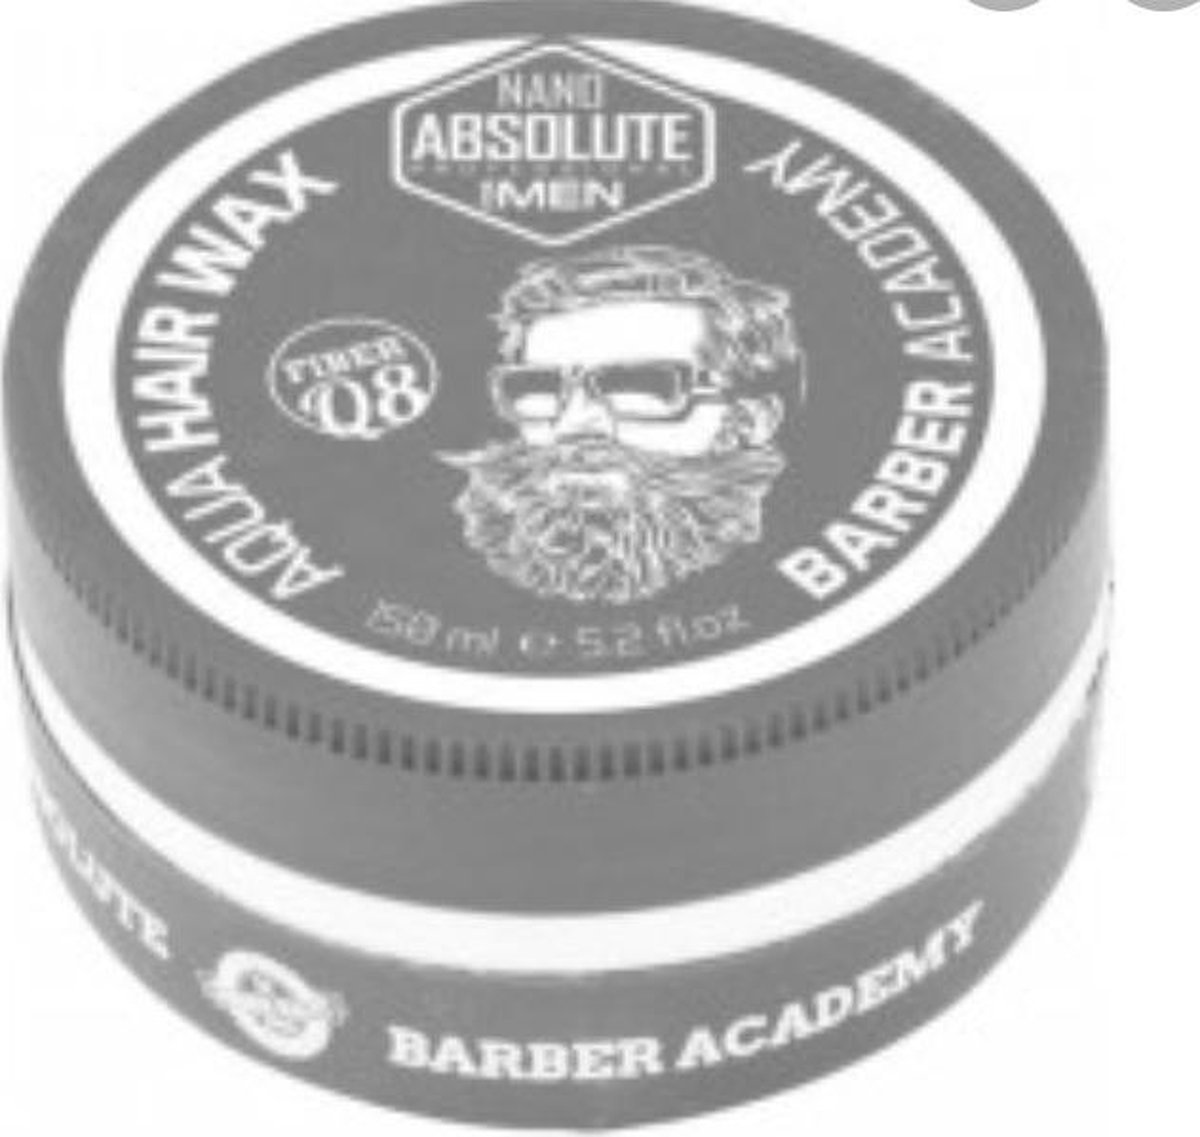 Nano Absolute Barber Academy Wax Fiber